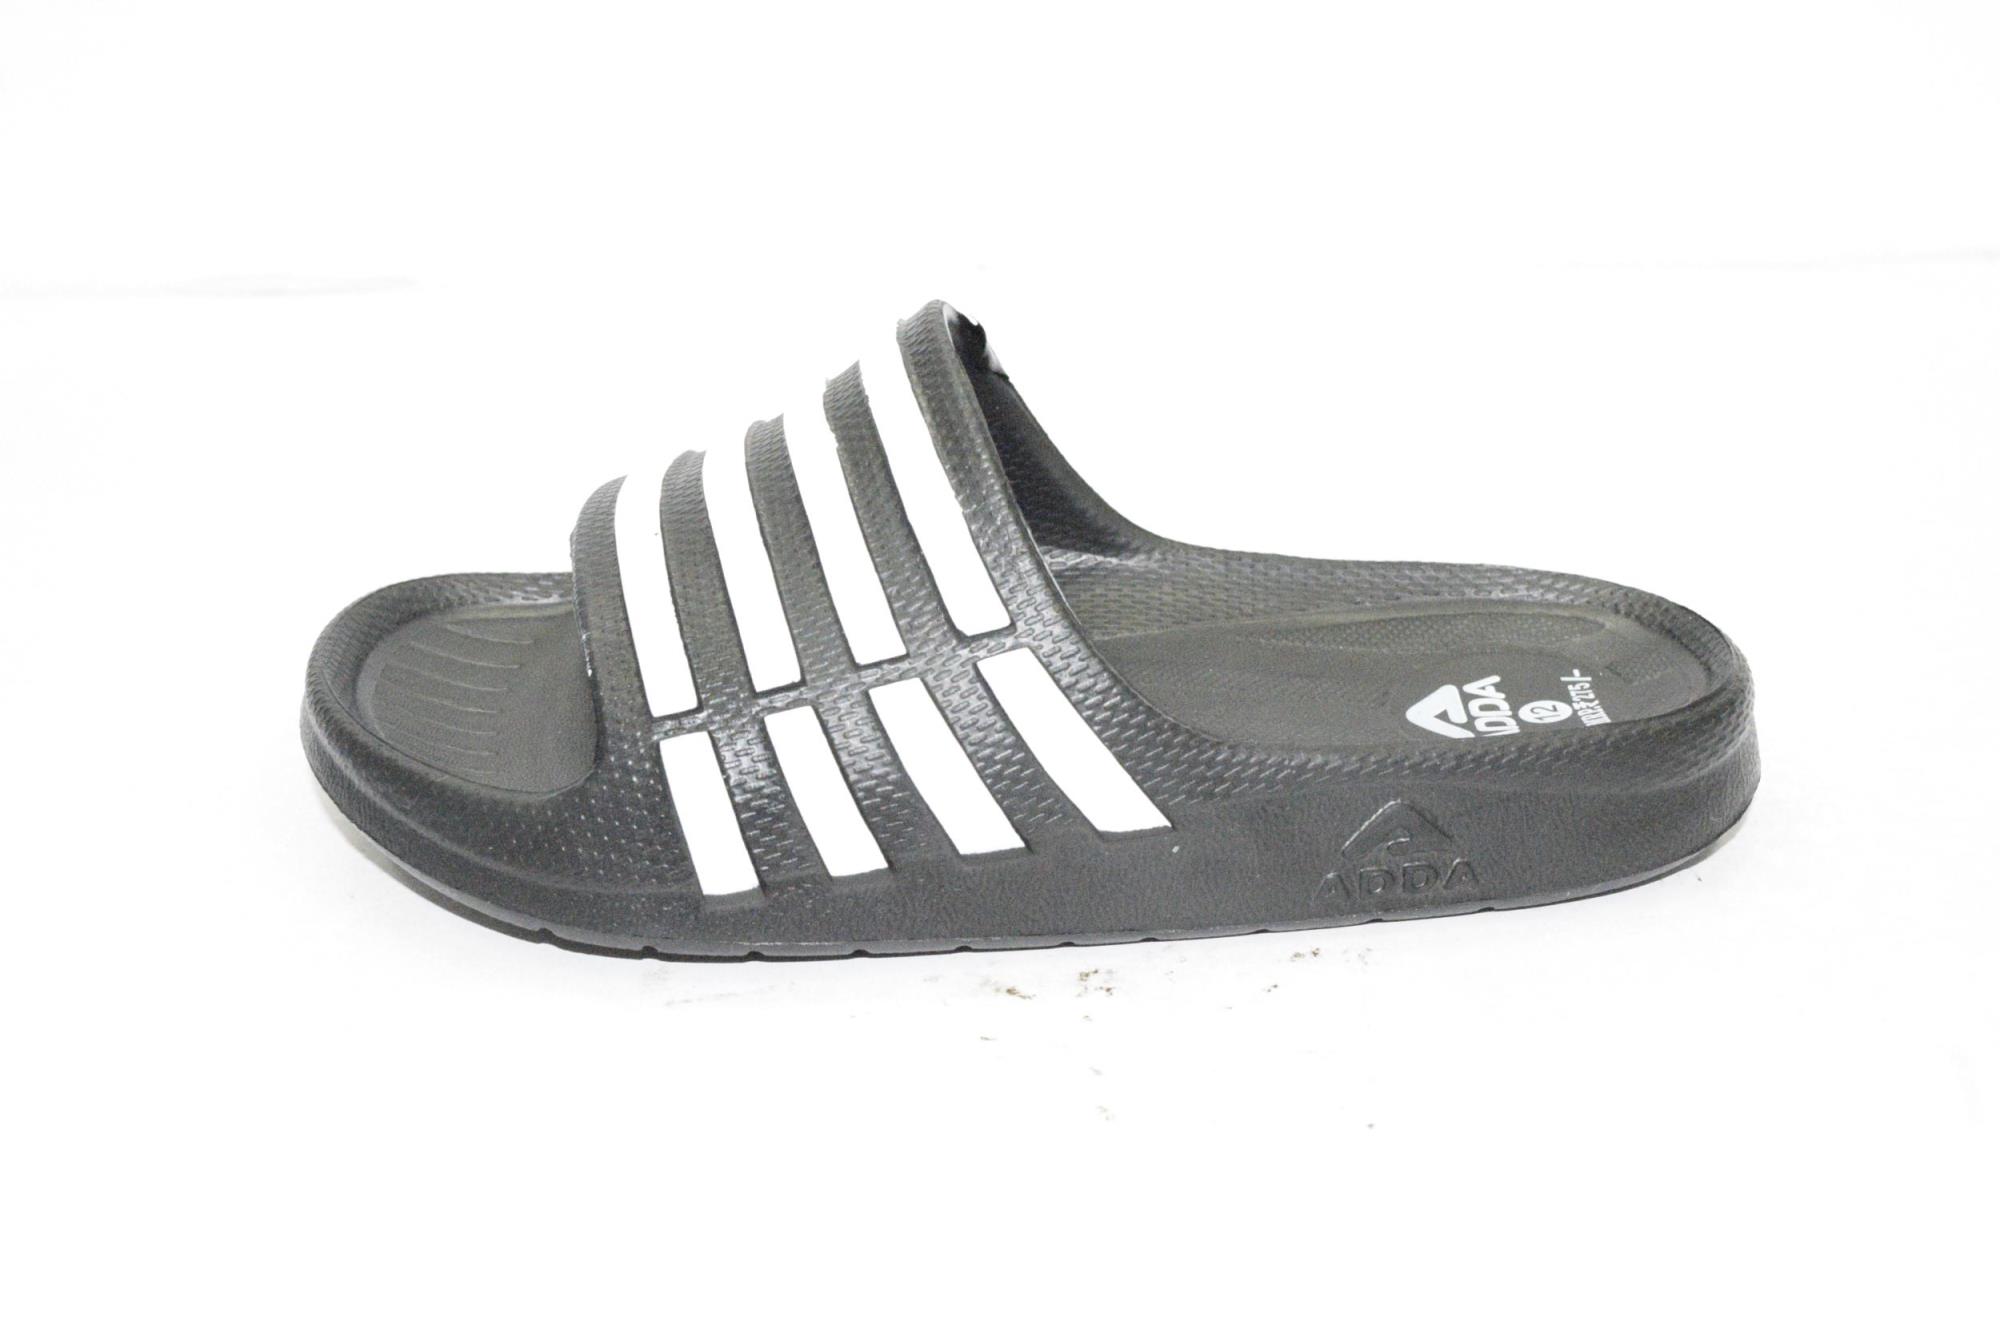 adda slippers for boys